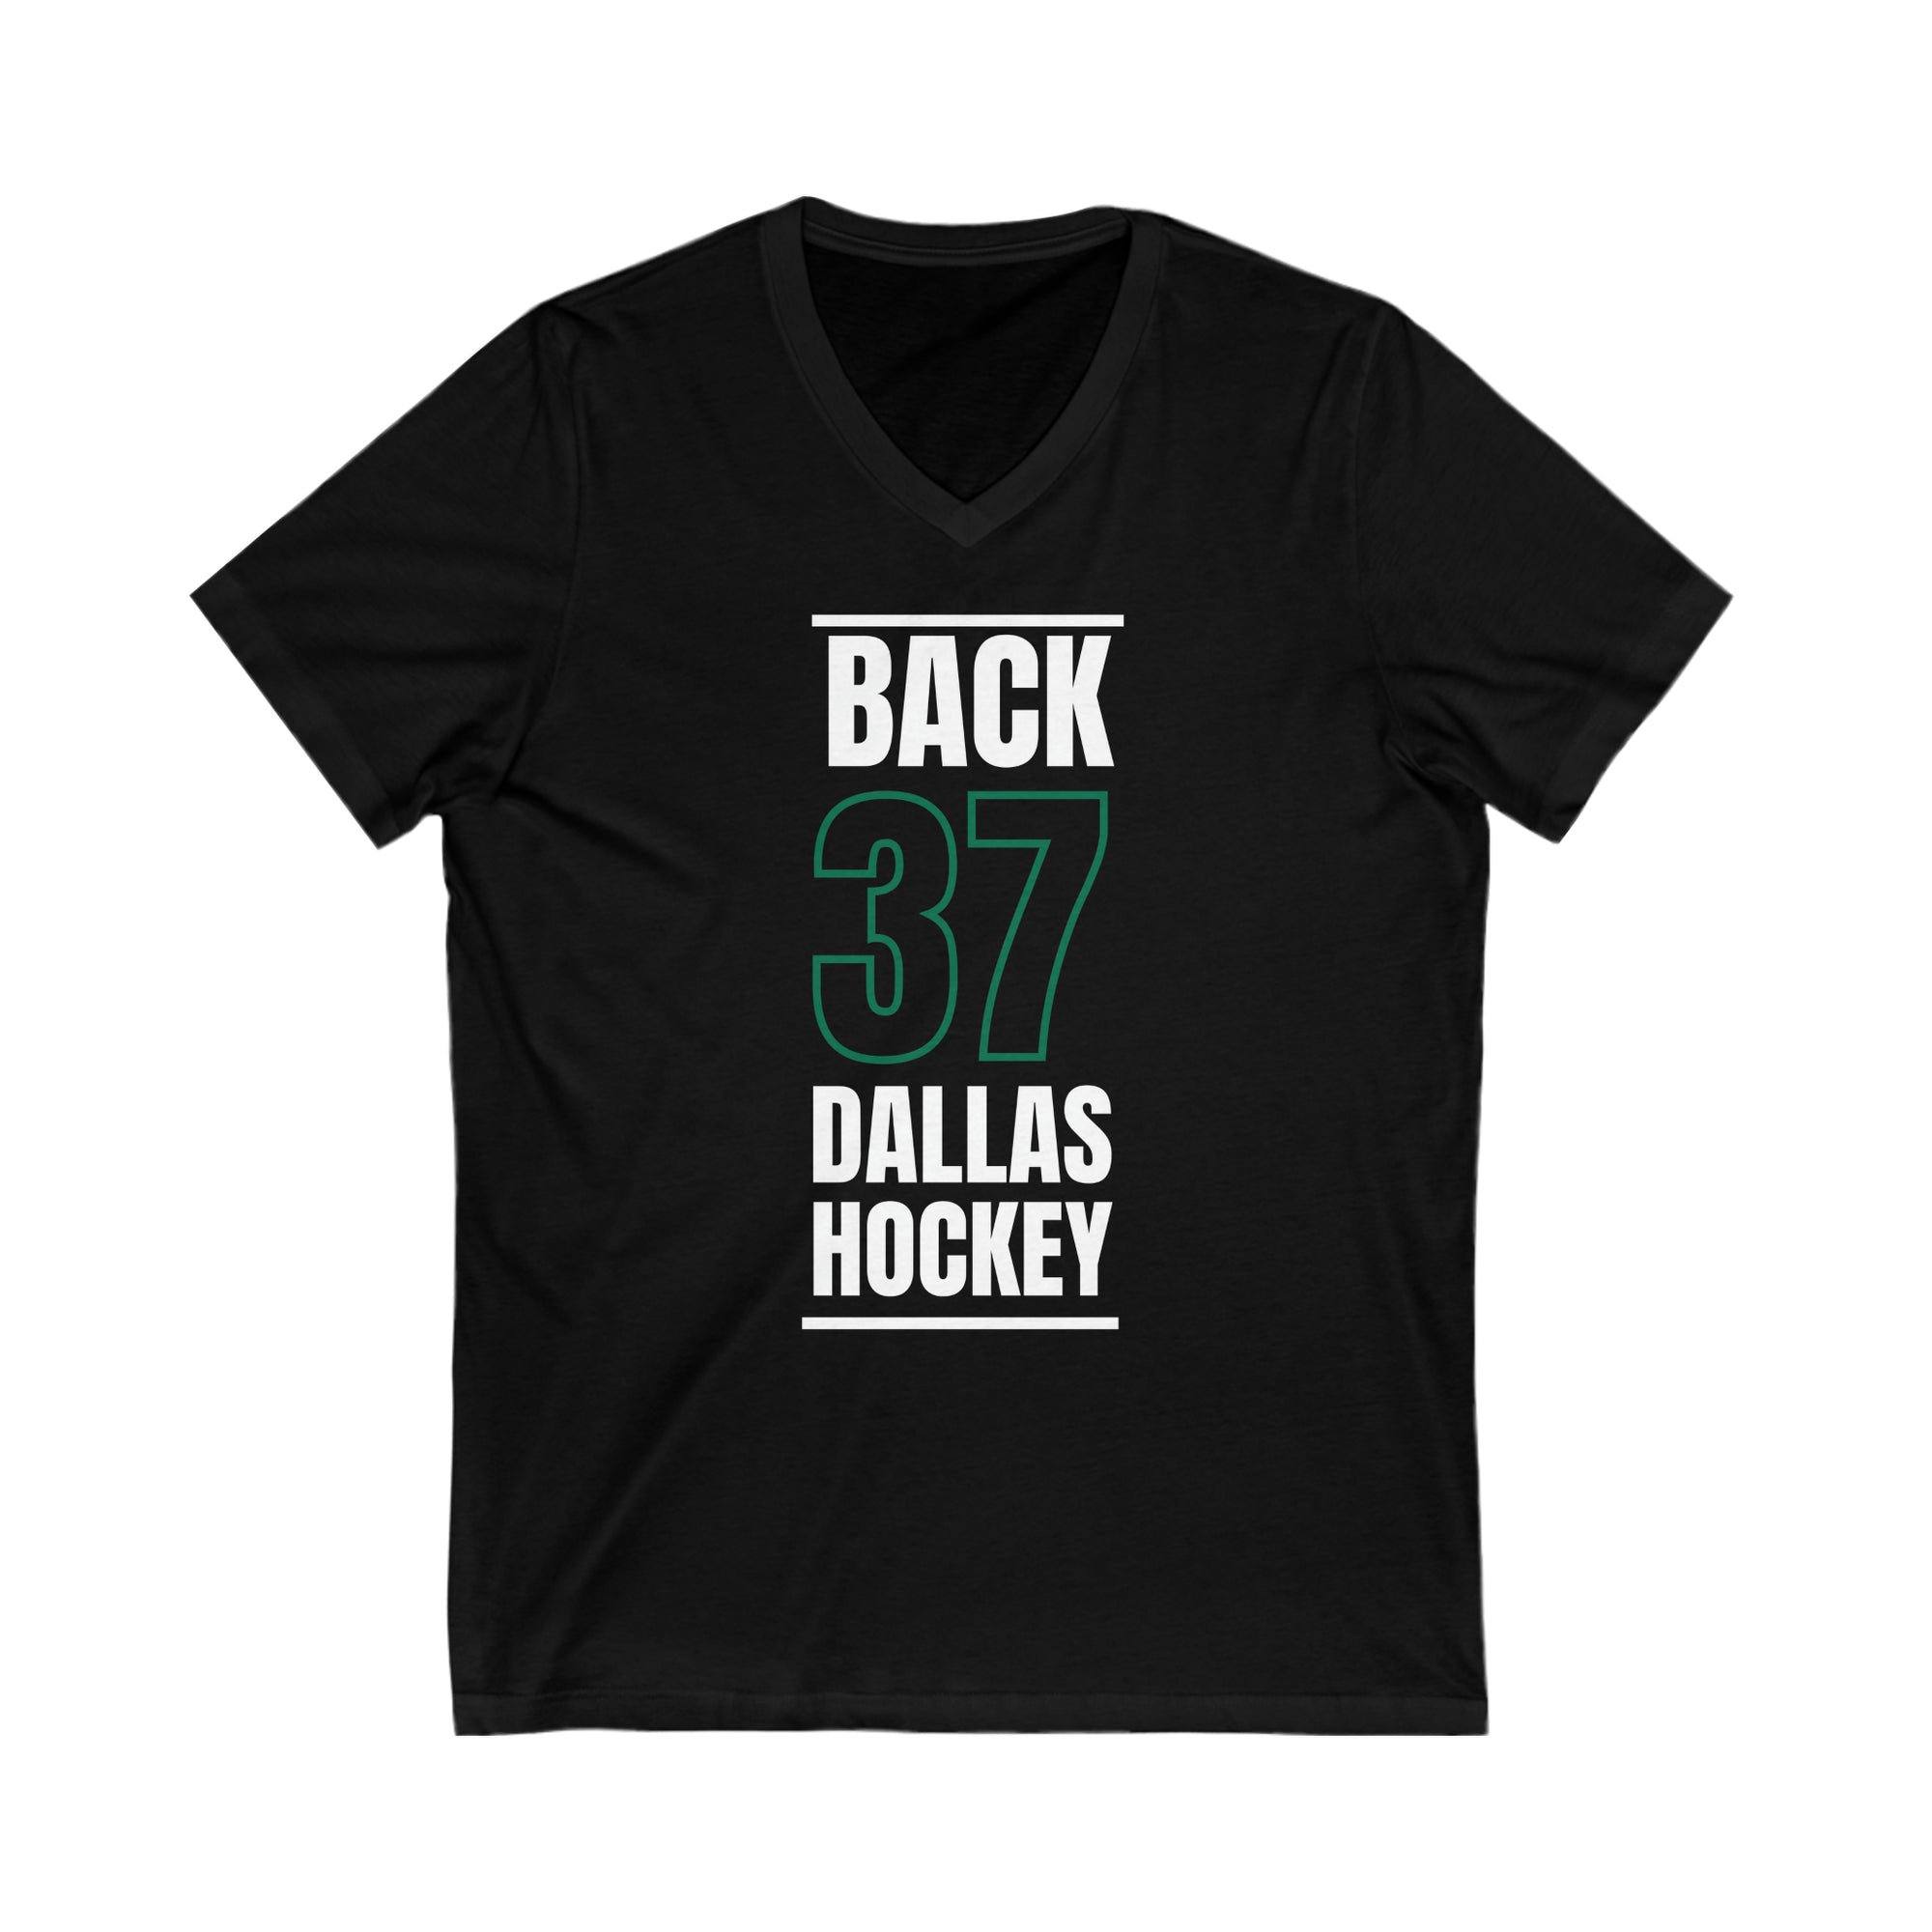 Back 37 Dallas Hockey Black Vertical Design Unisex V-Neck Tee